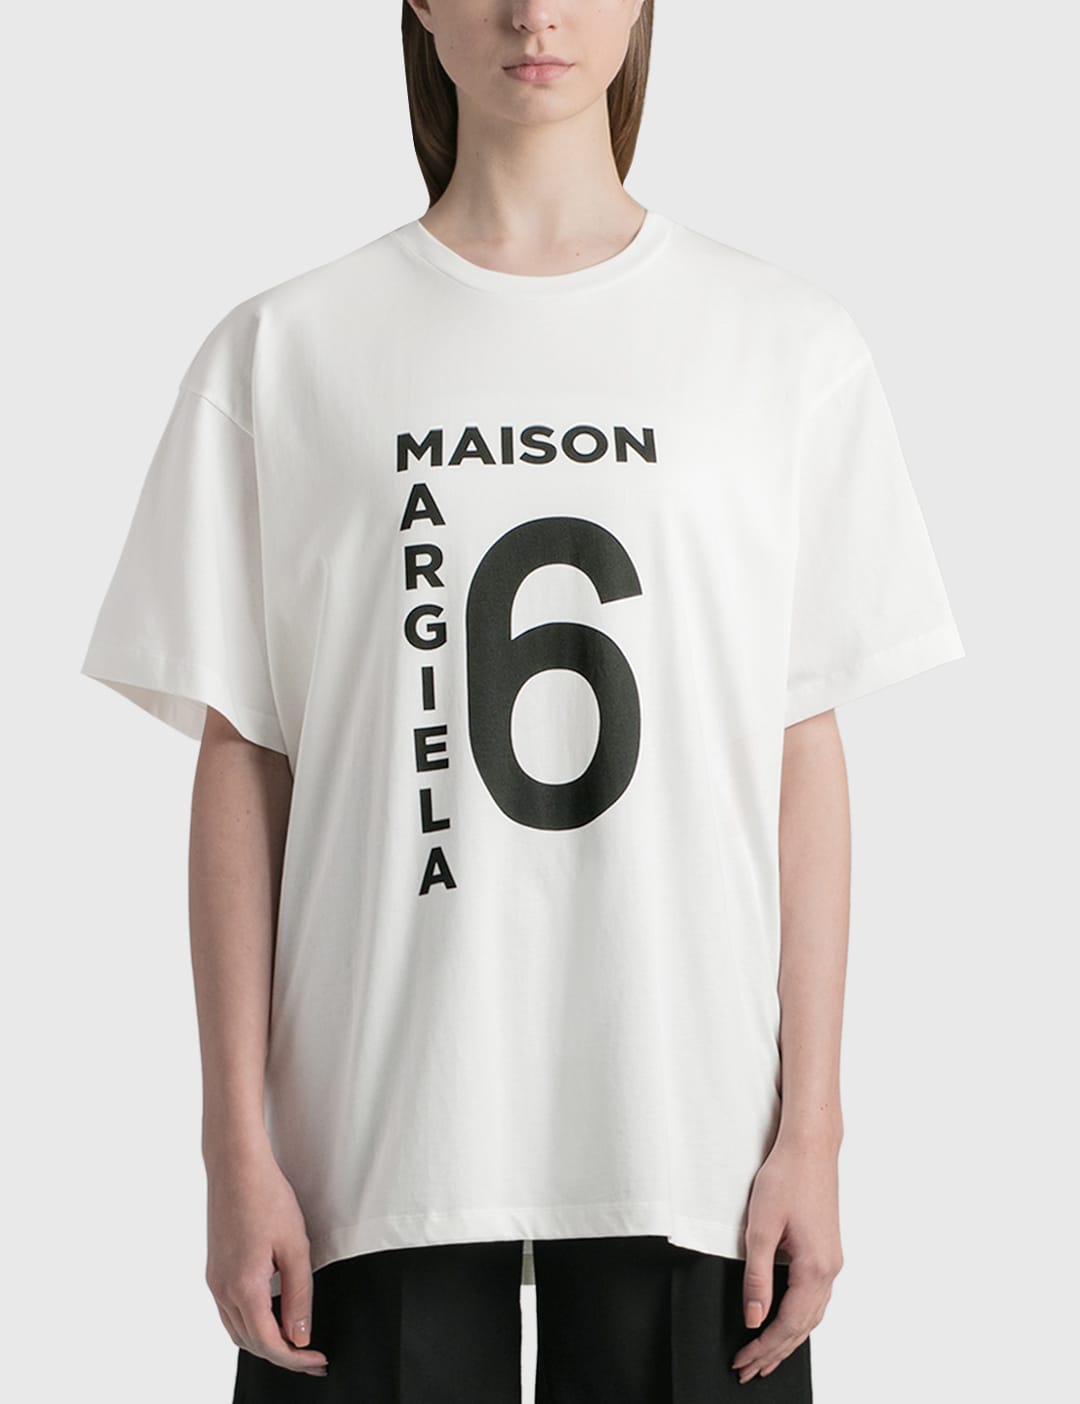 MM6 Maison Margiela - Logo T-shirt | HBX - Globally Curated ...